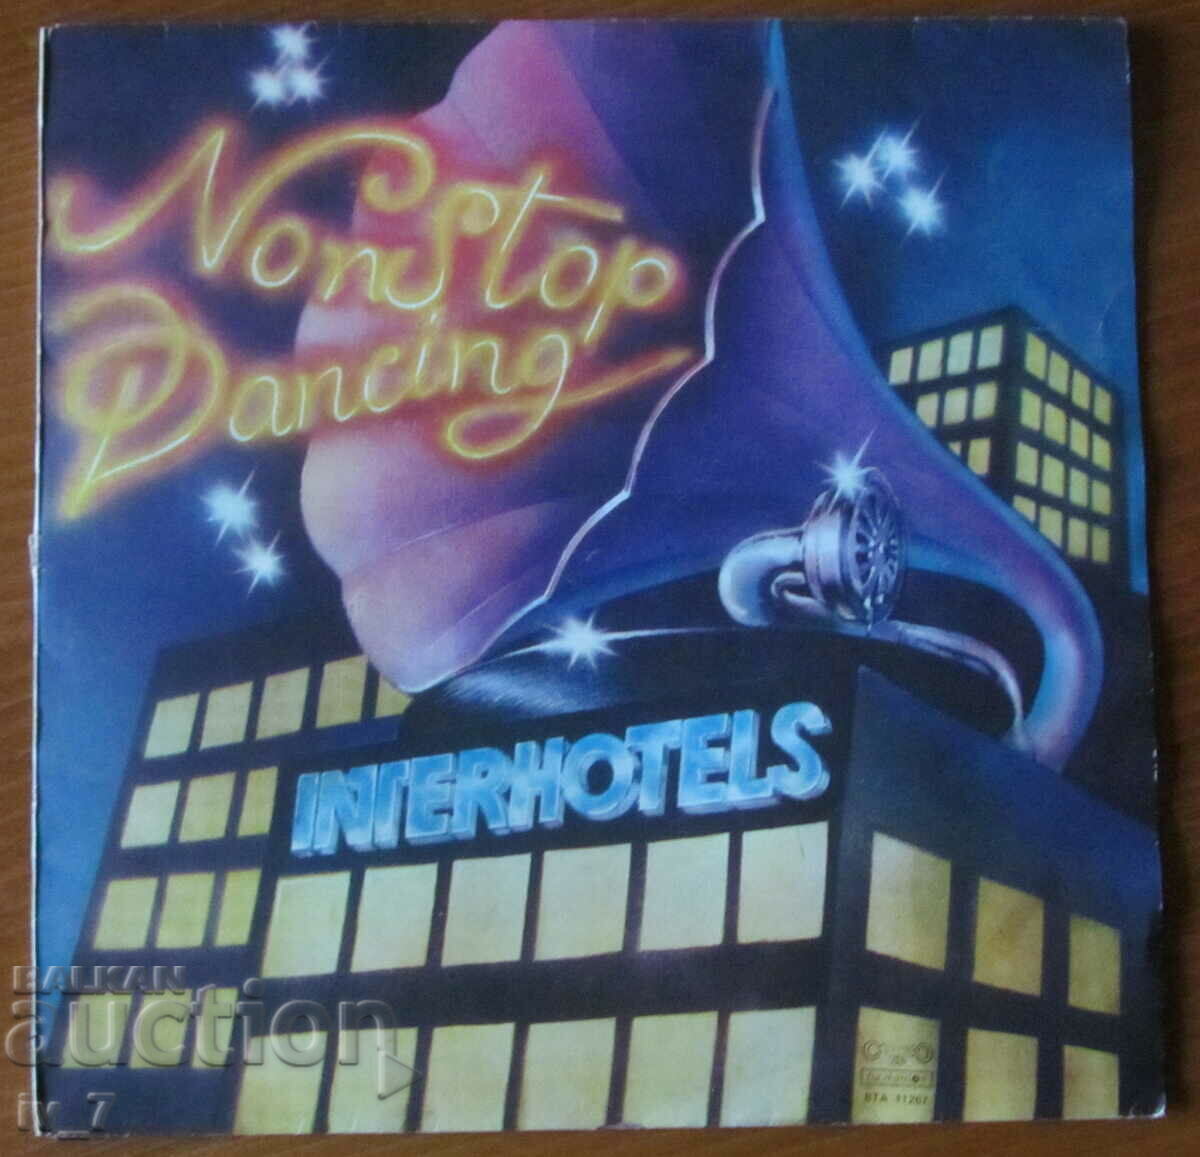 RECORD-Interhotels-"Non stop dance floor", μεγάλου σχήματος